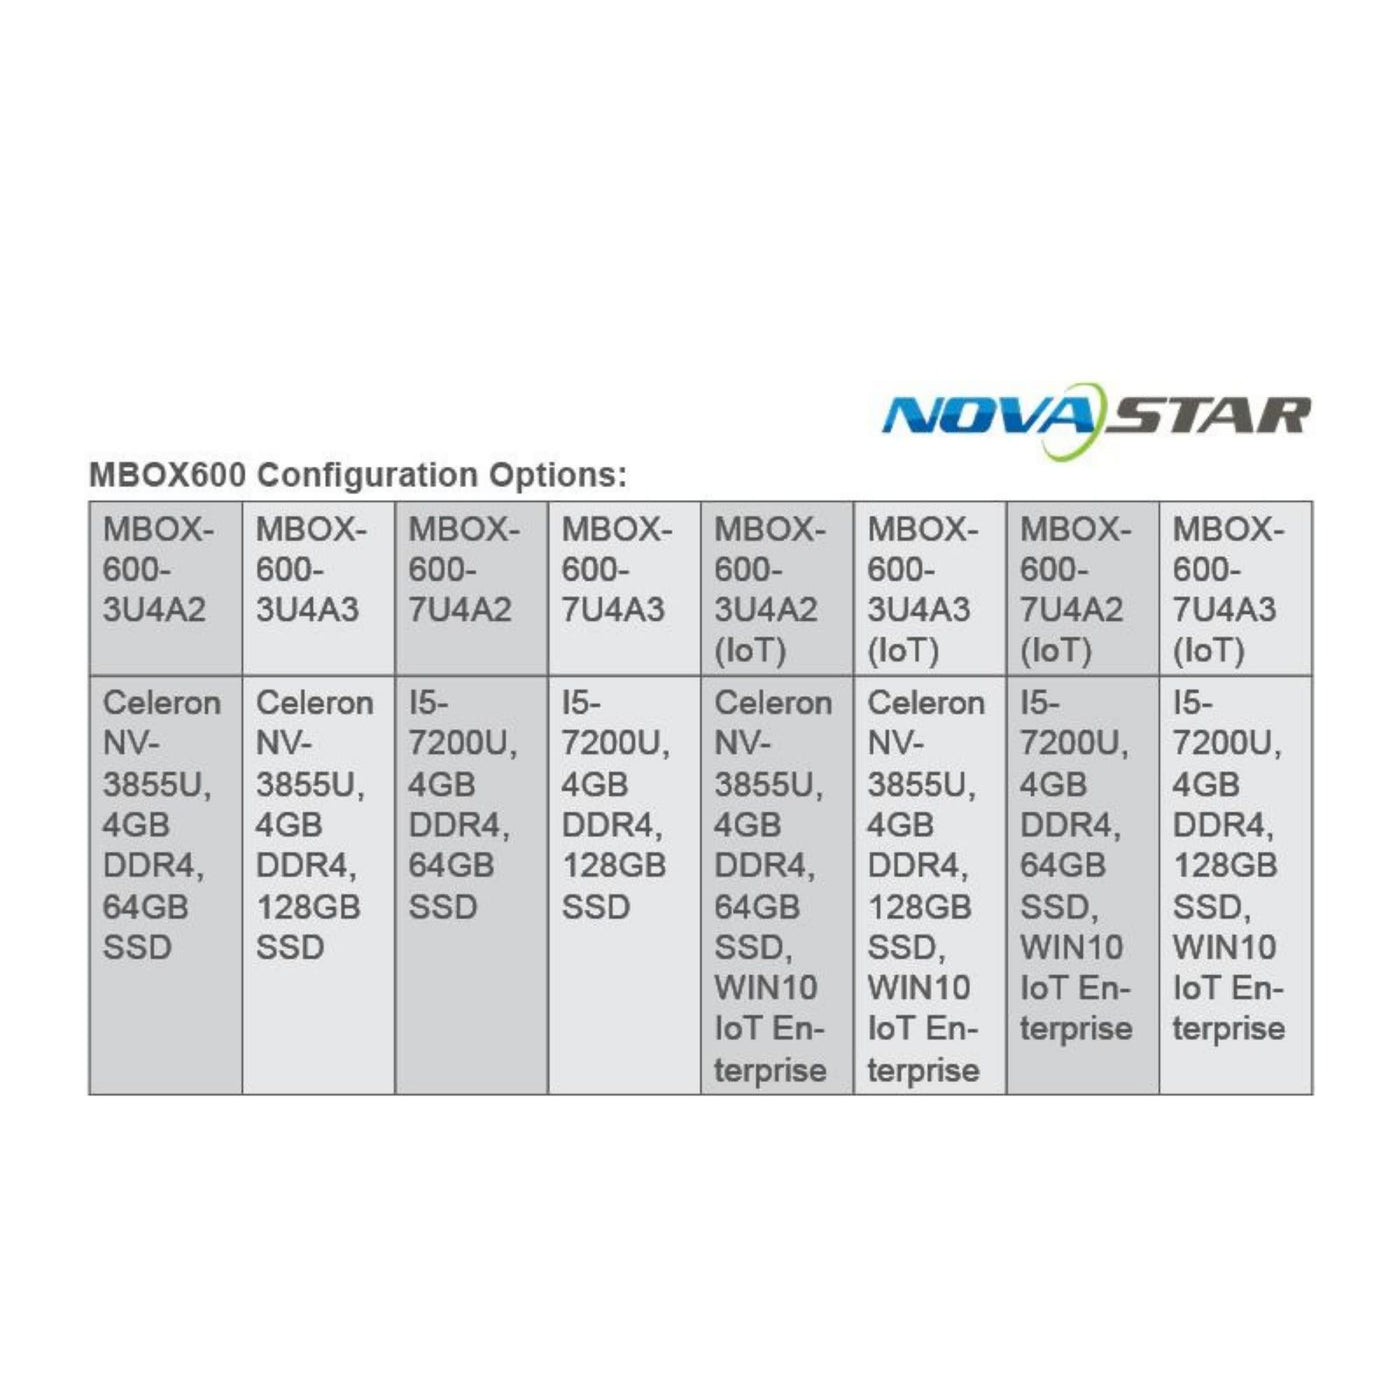 NovaStar 124226 MBOX-600-3U4A3 (IoT) MBOX Series Multimedia Player